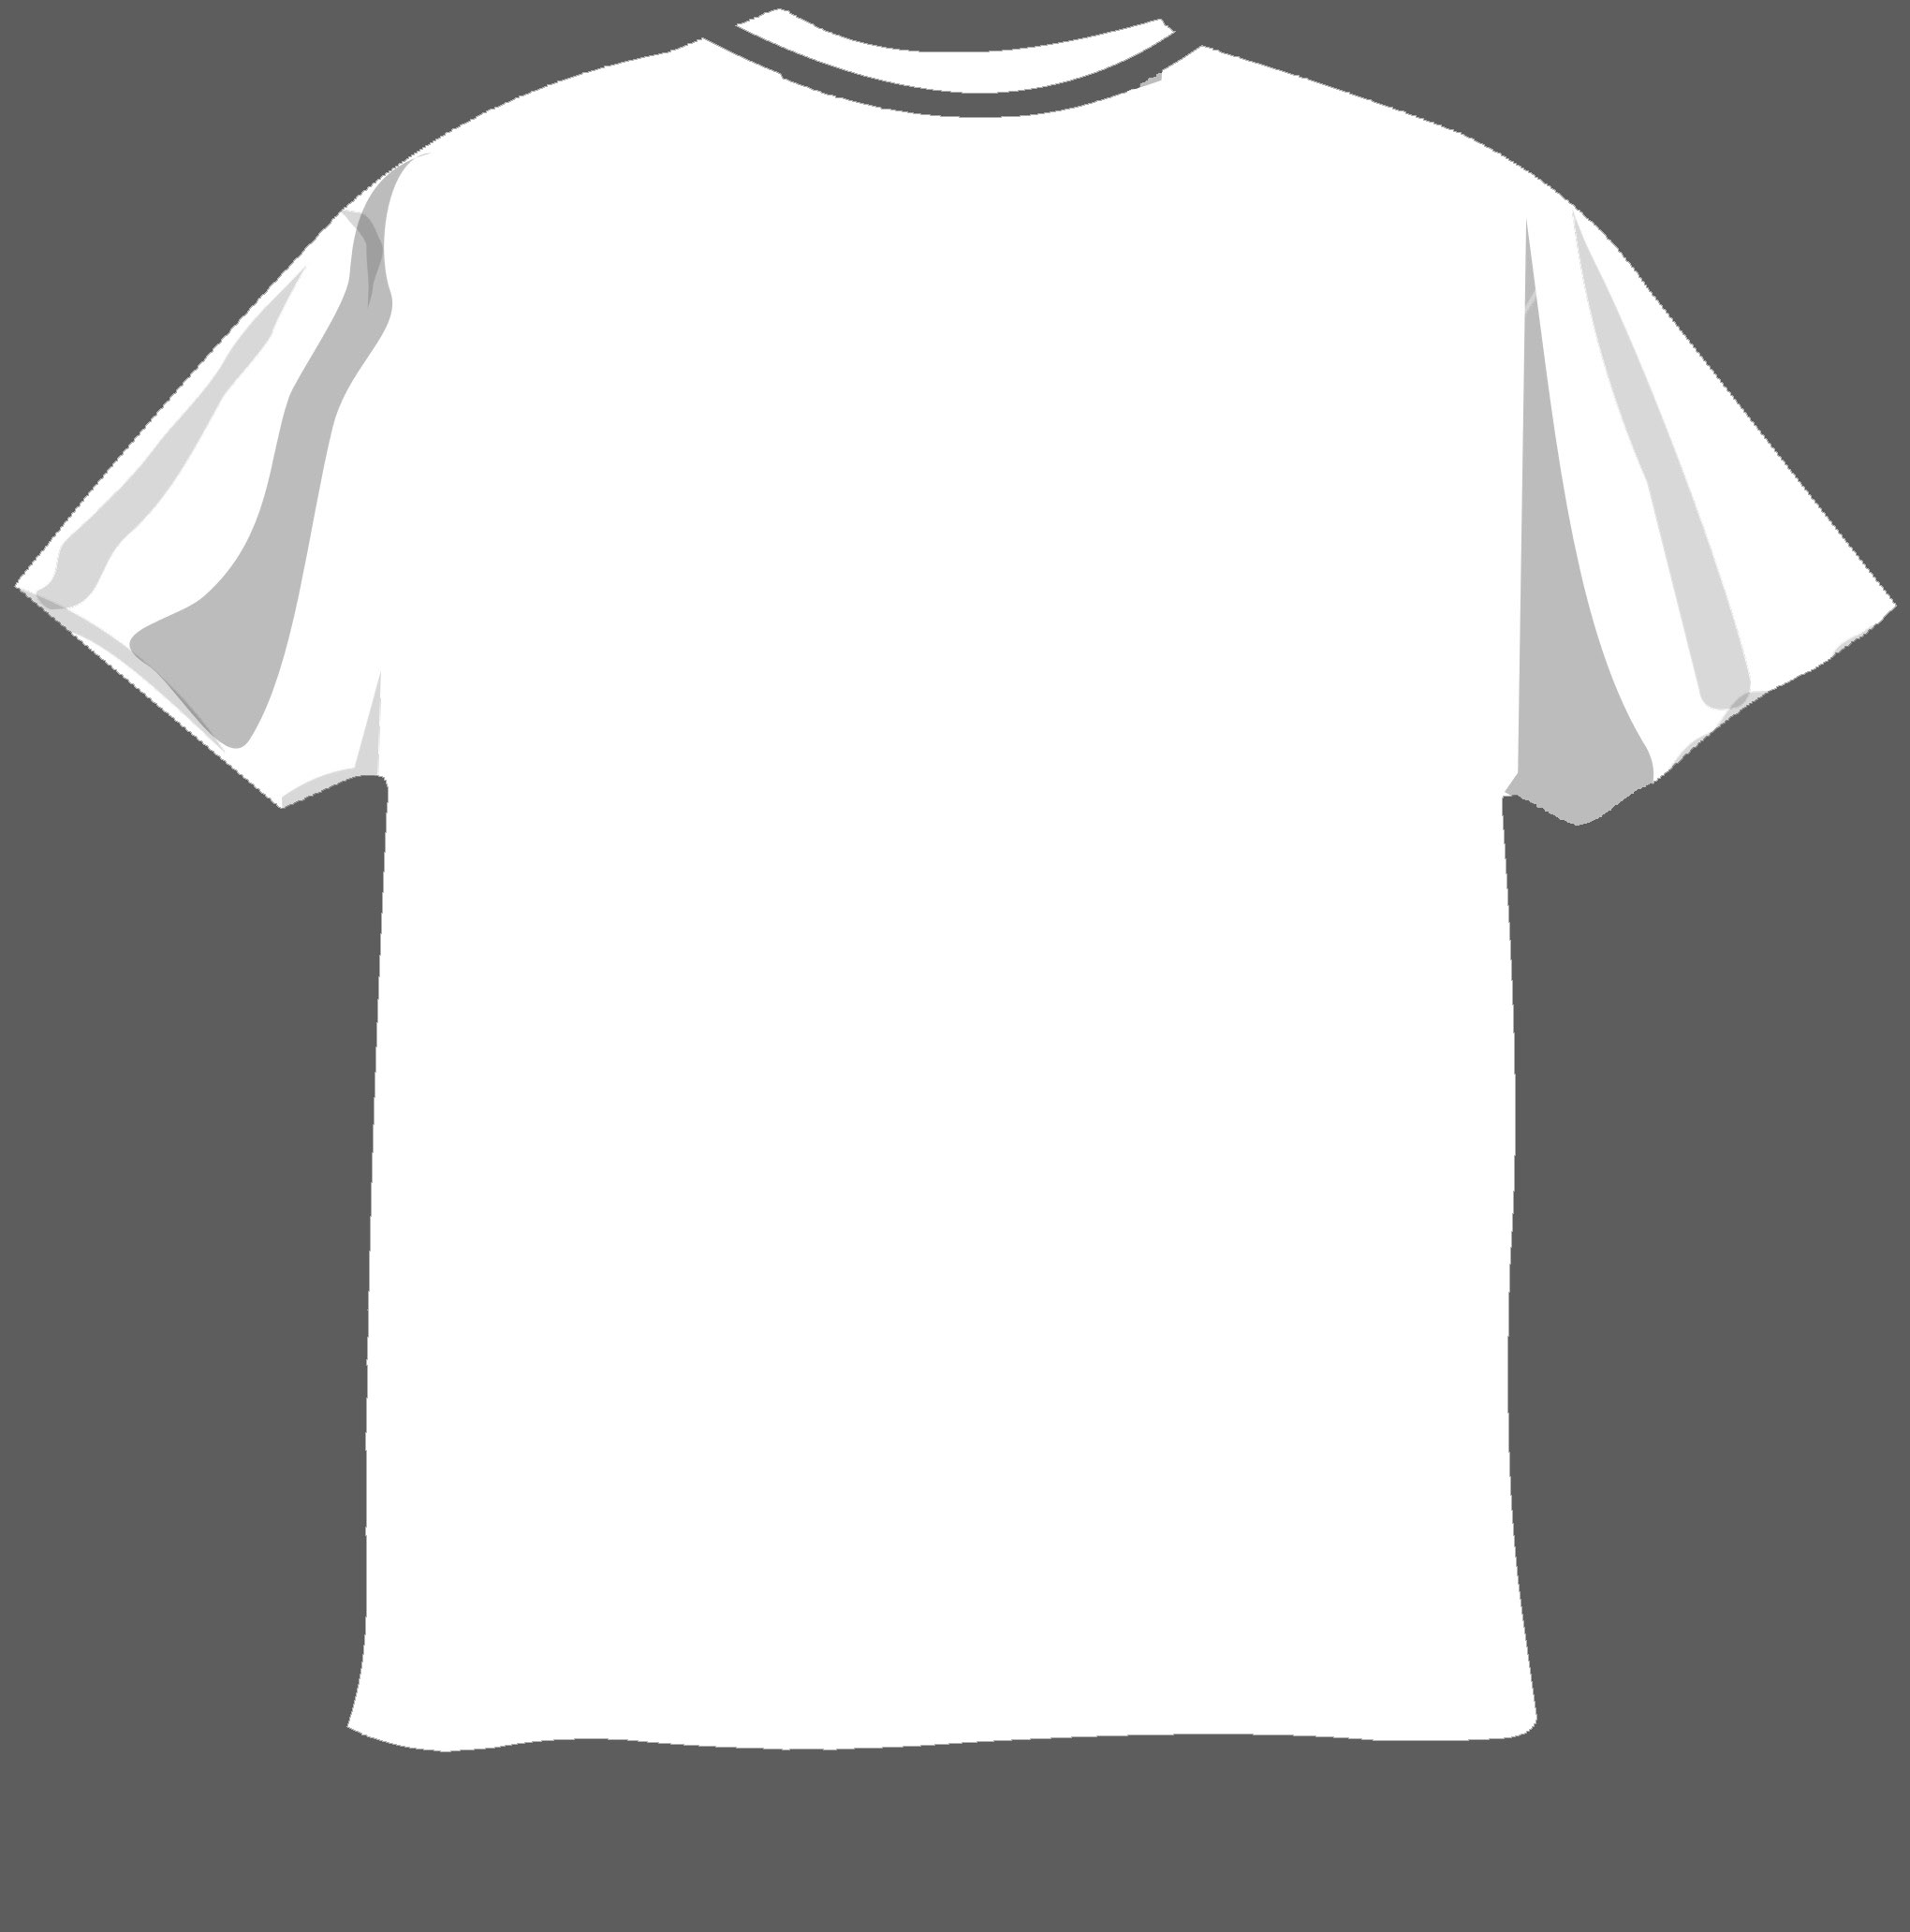 15 Male T-Shirt Template Photoshop Design Images